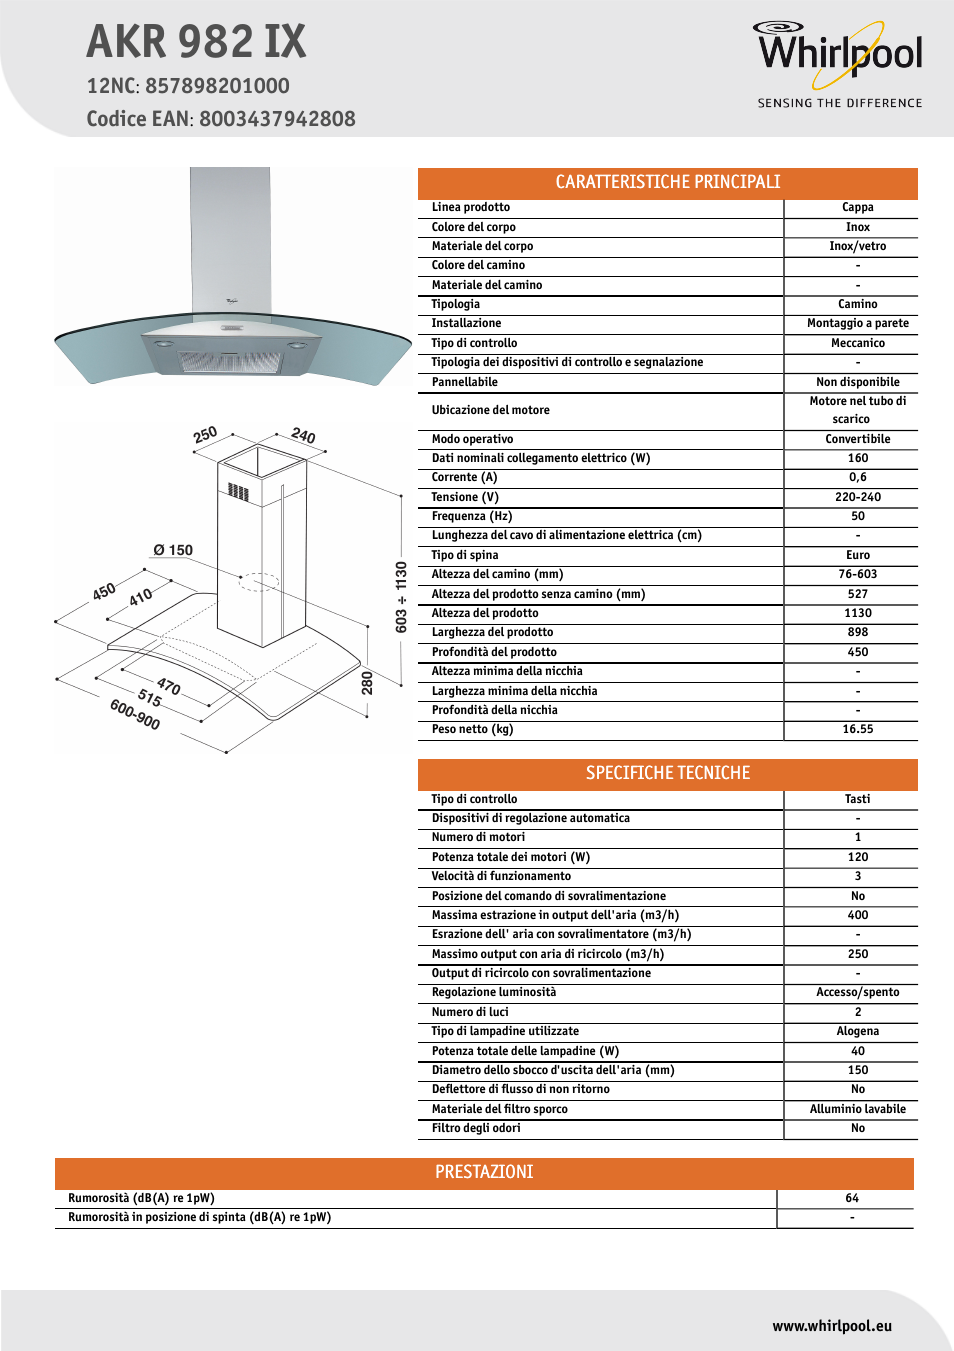 Whirlpool AKR 982 IX Manuale d'uso | Pagine: 1